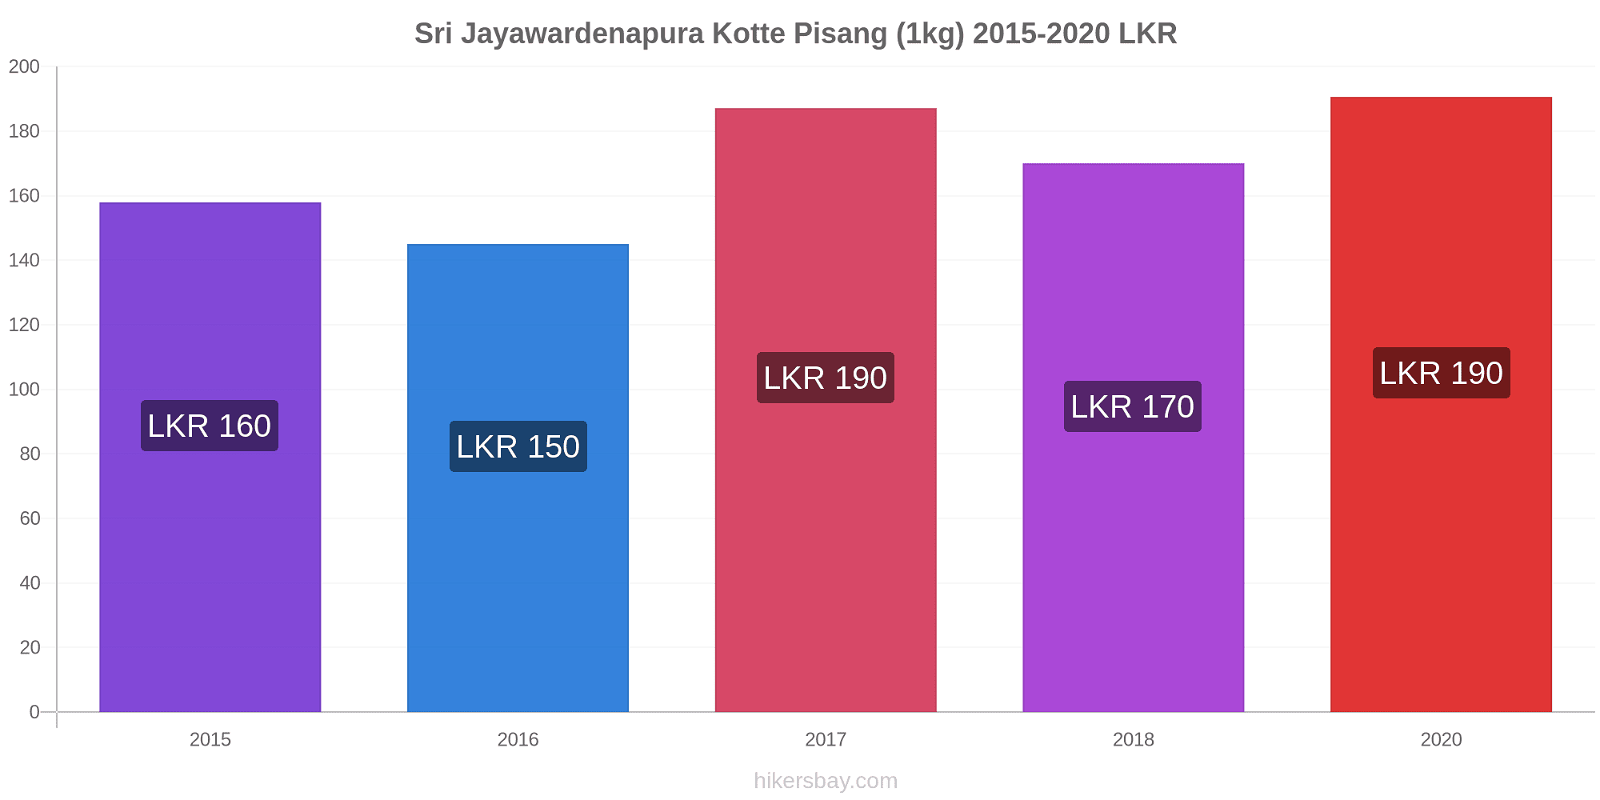 Sri Jayawardenapura Kotte perubahan harga Pisang (1kg) hikersbay.com